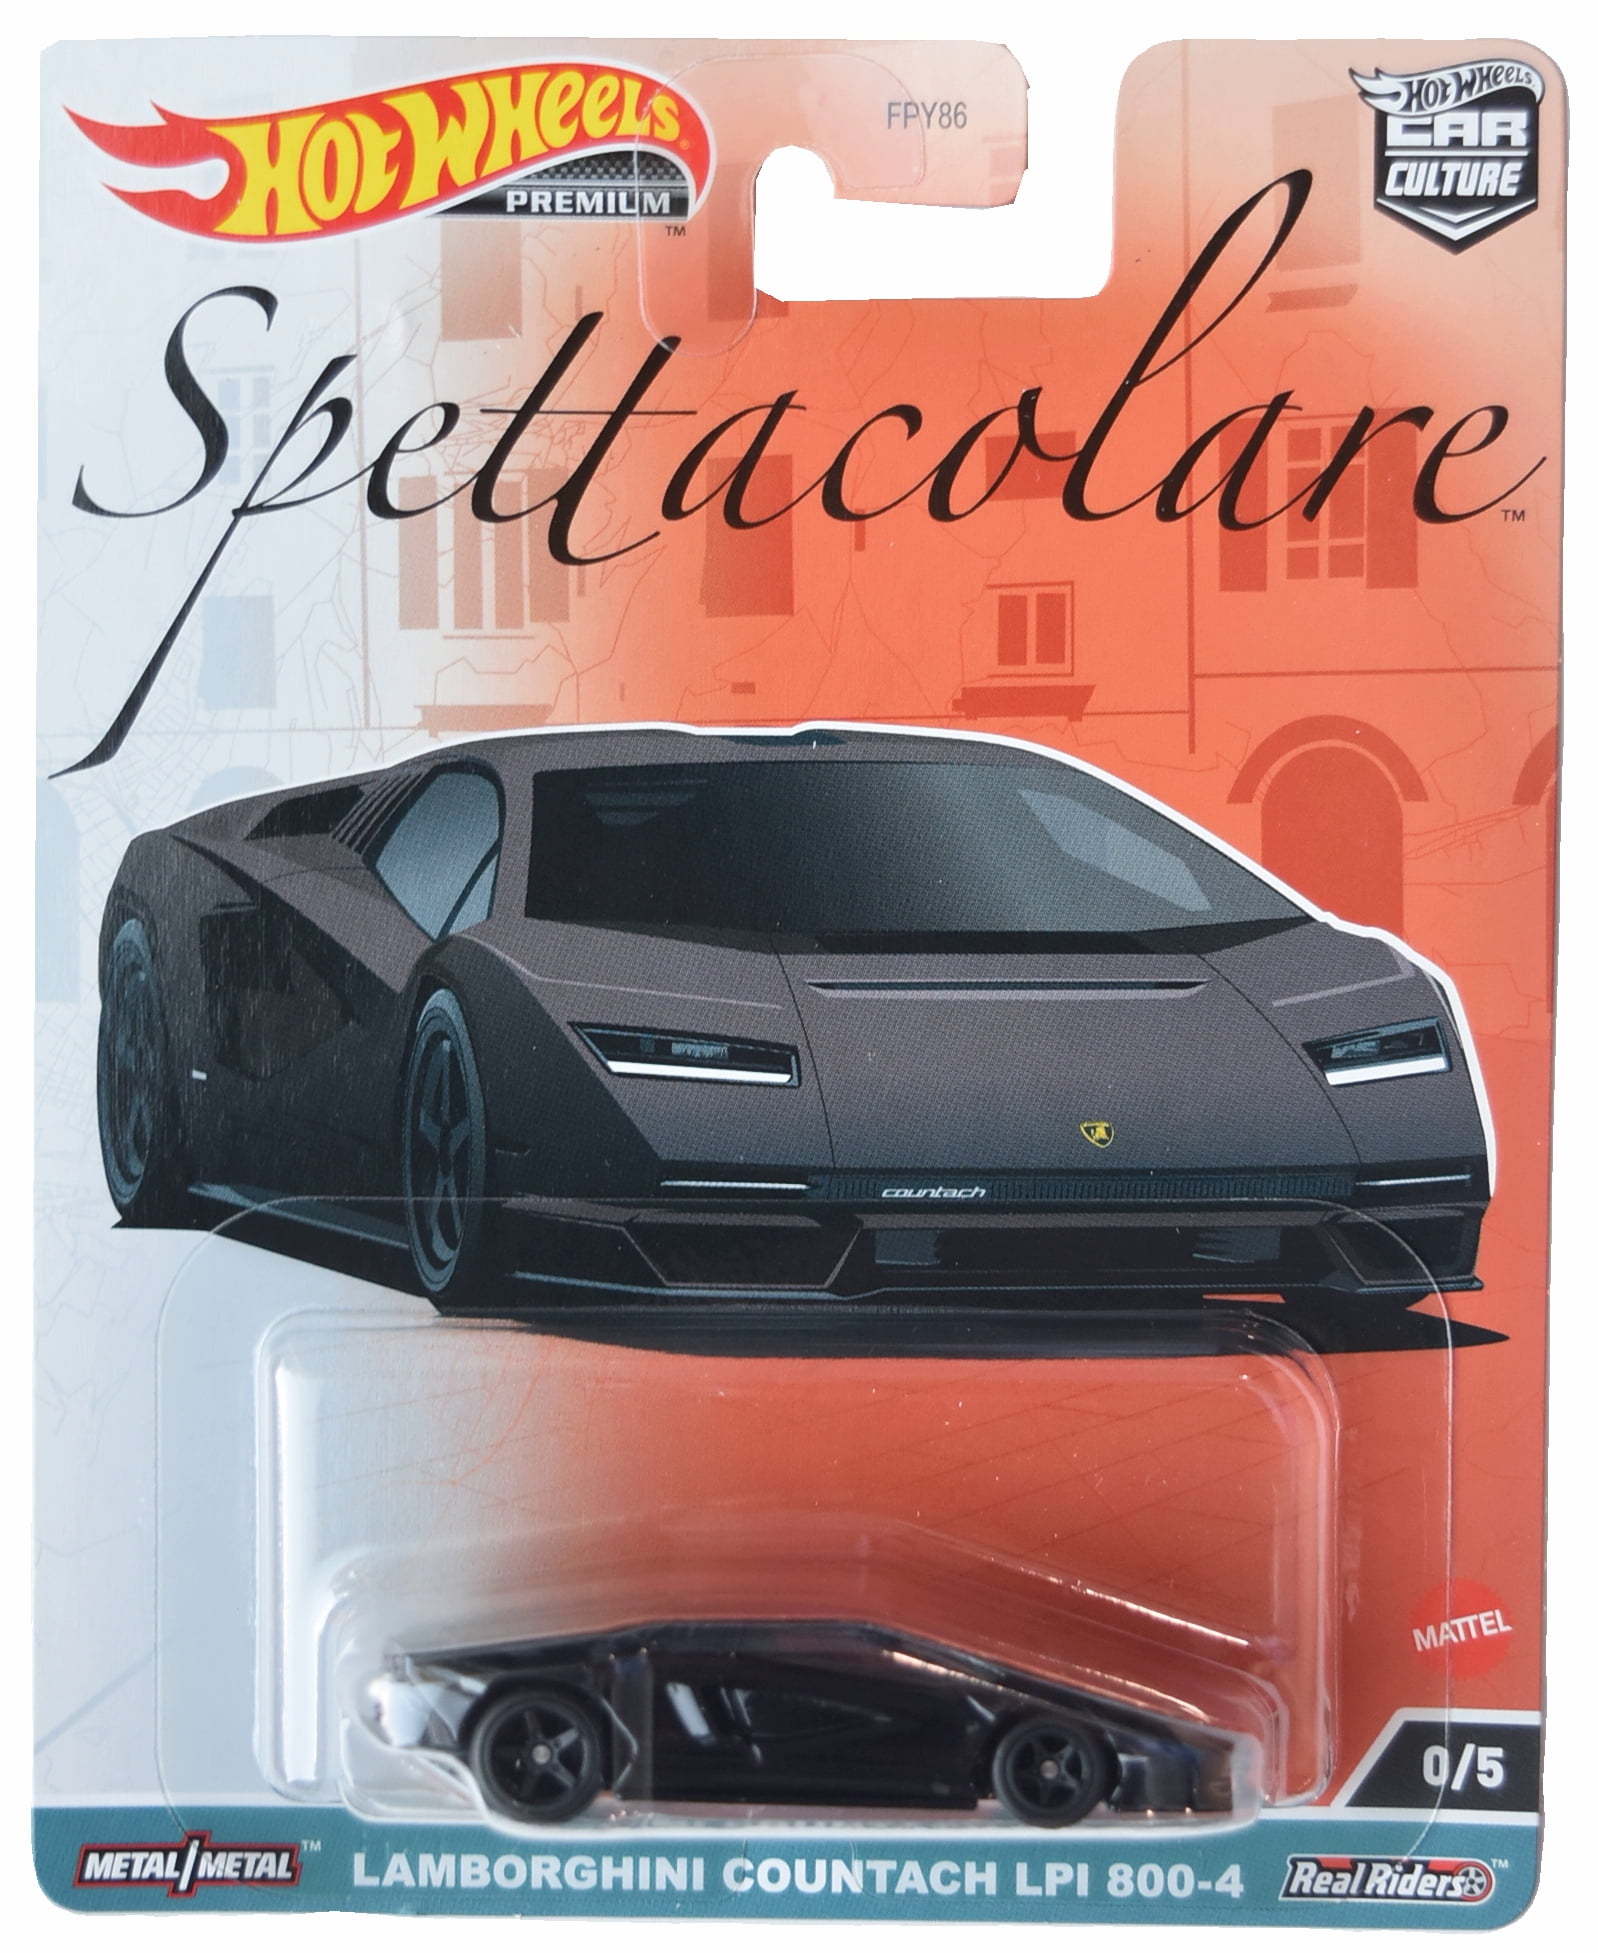 Hot Wheels Lamborghini Countach LPI 800-4, Spettacolare 0/5 [Black